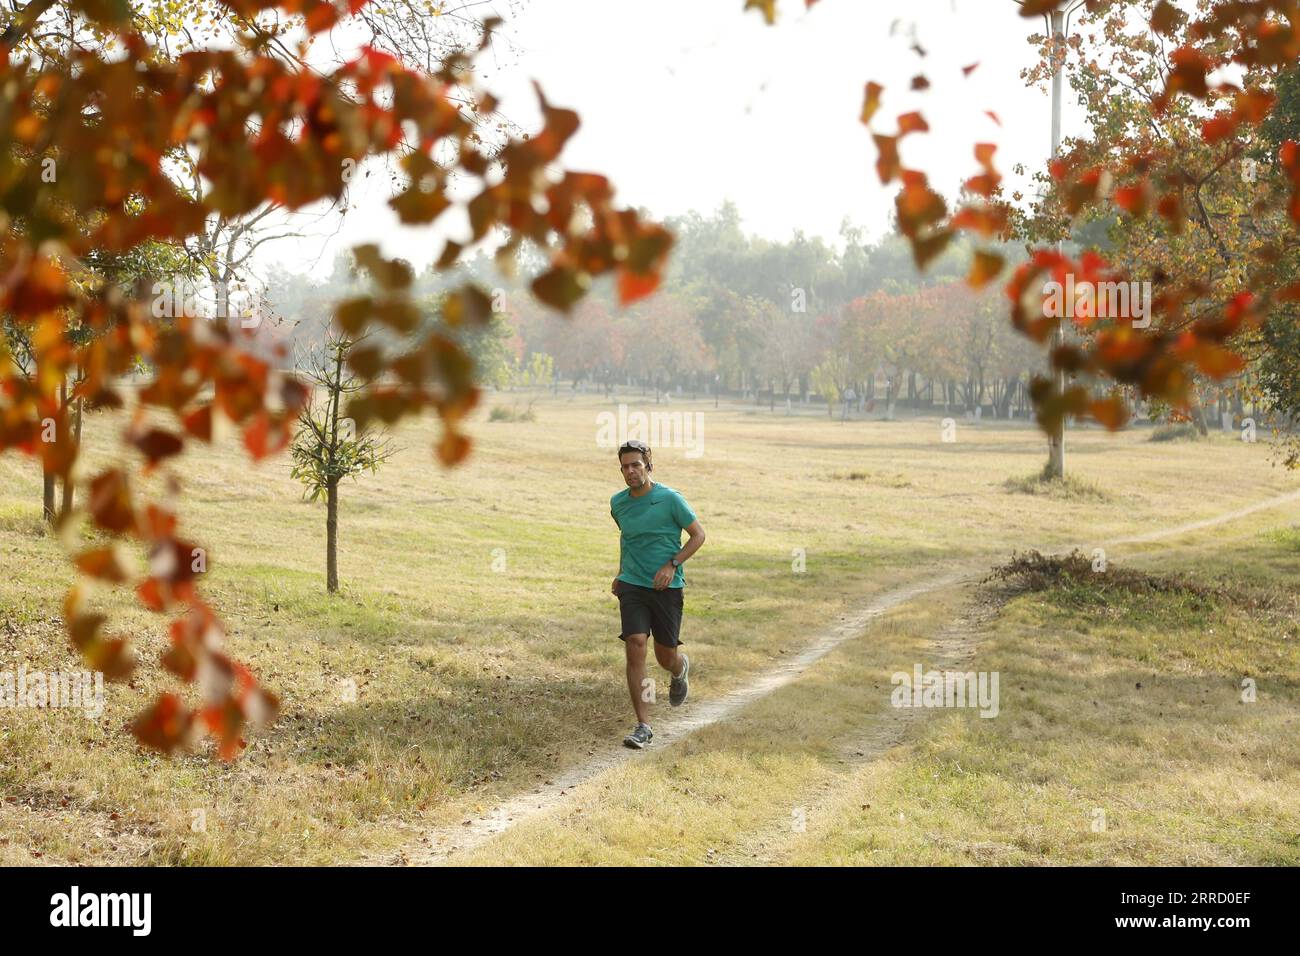 211125 -- ISLAMABAD, Nov. 25, 2021 -- A man runs on a track at Fatima Jinnah Park in Islamabad, capital of Pakistan, Nov. 25, 2021.  PAKISTAN-ISLAMABAD-AUTUMN SCENERY AhmadxKamal PUBLICATIONxNOTxINxCHN Stock Photo